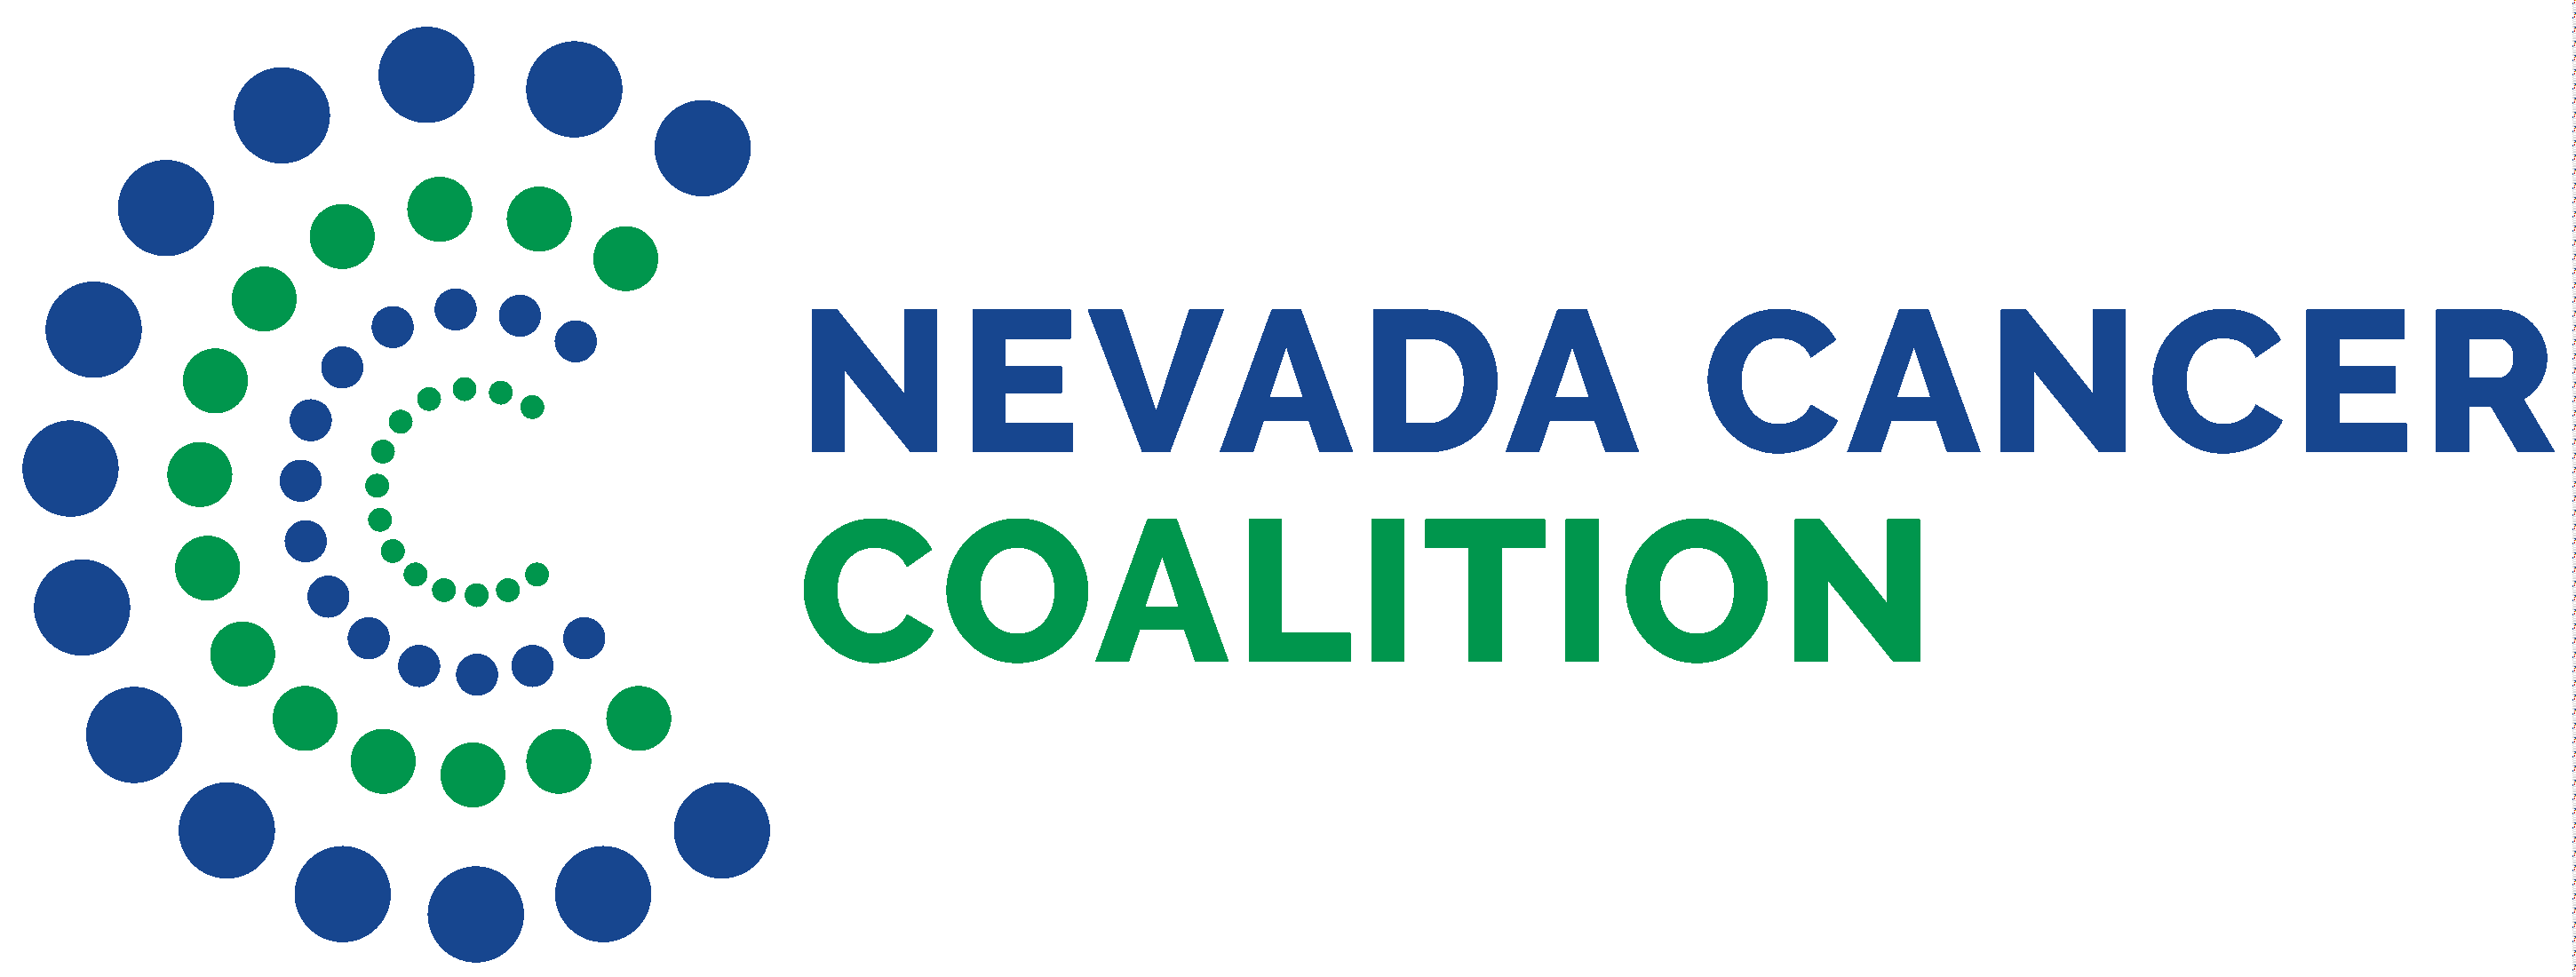 Nevada Cancer Coalition 